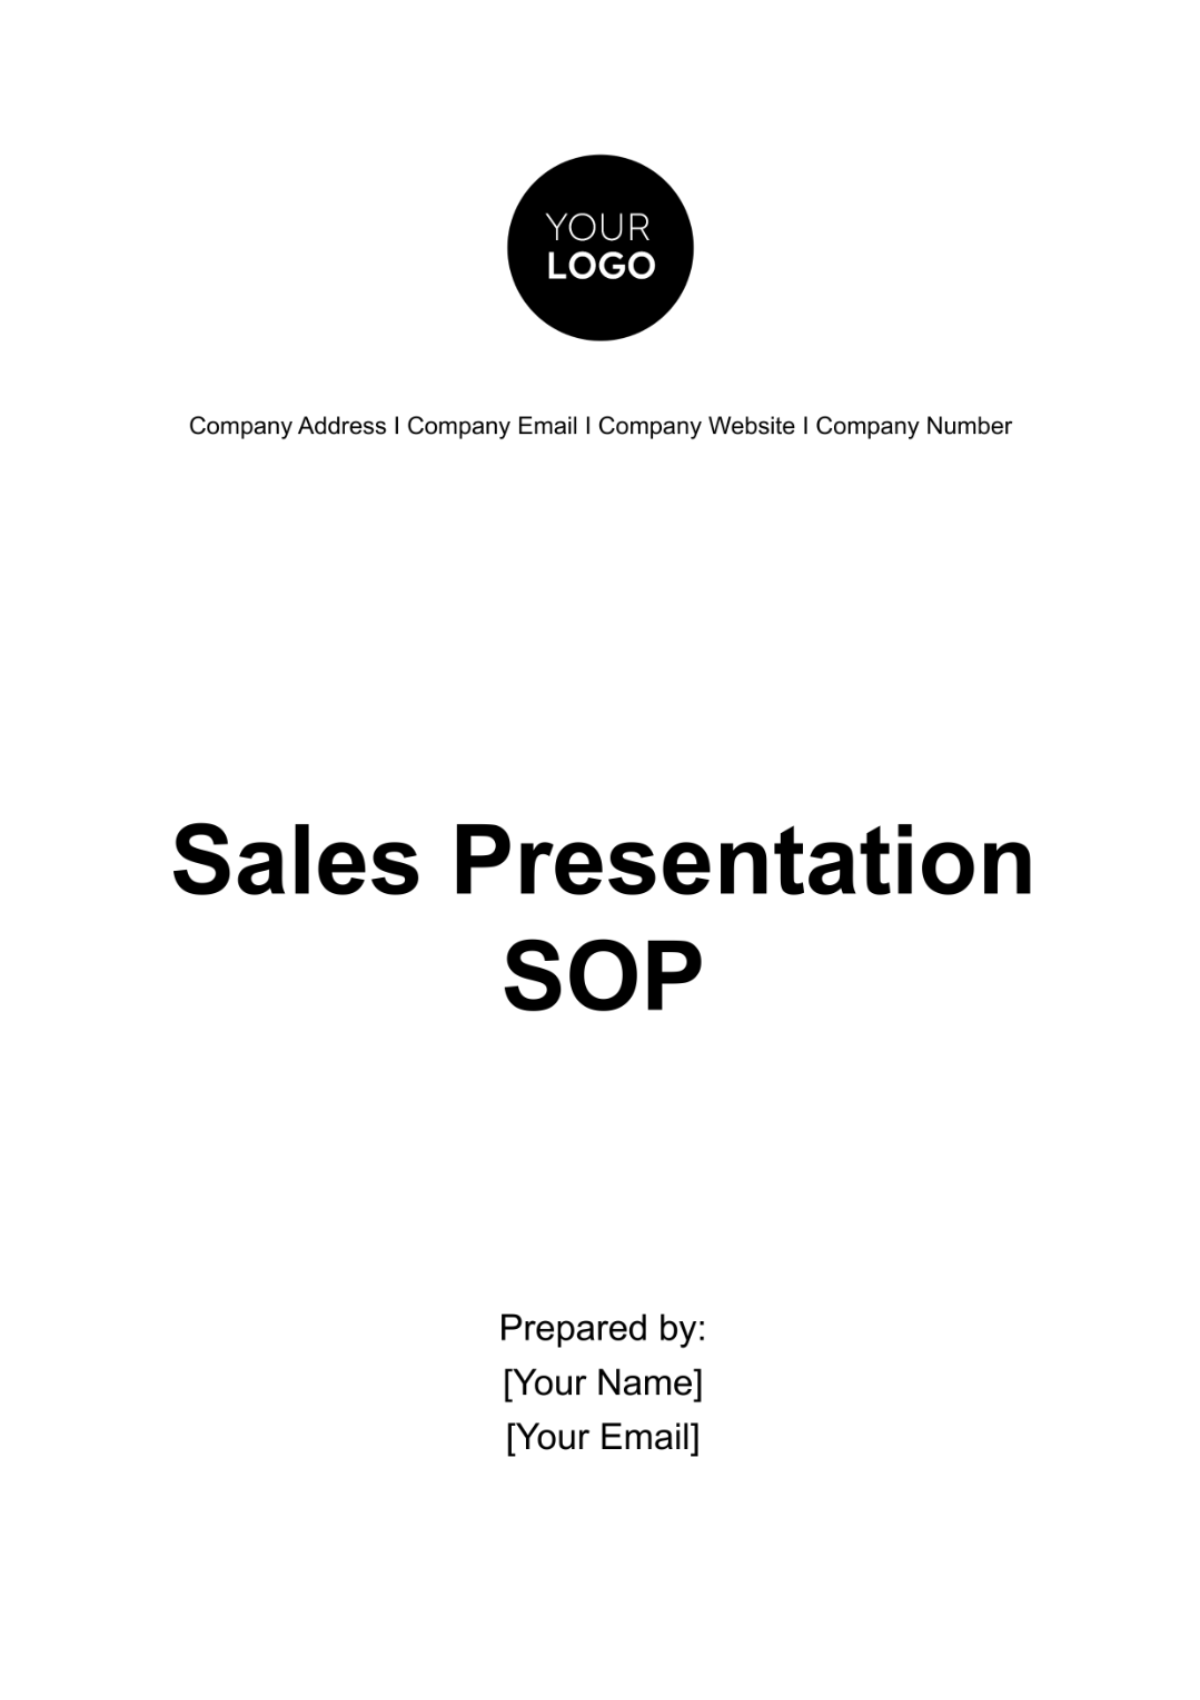 Sales Presentation SOP Template